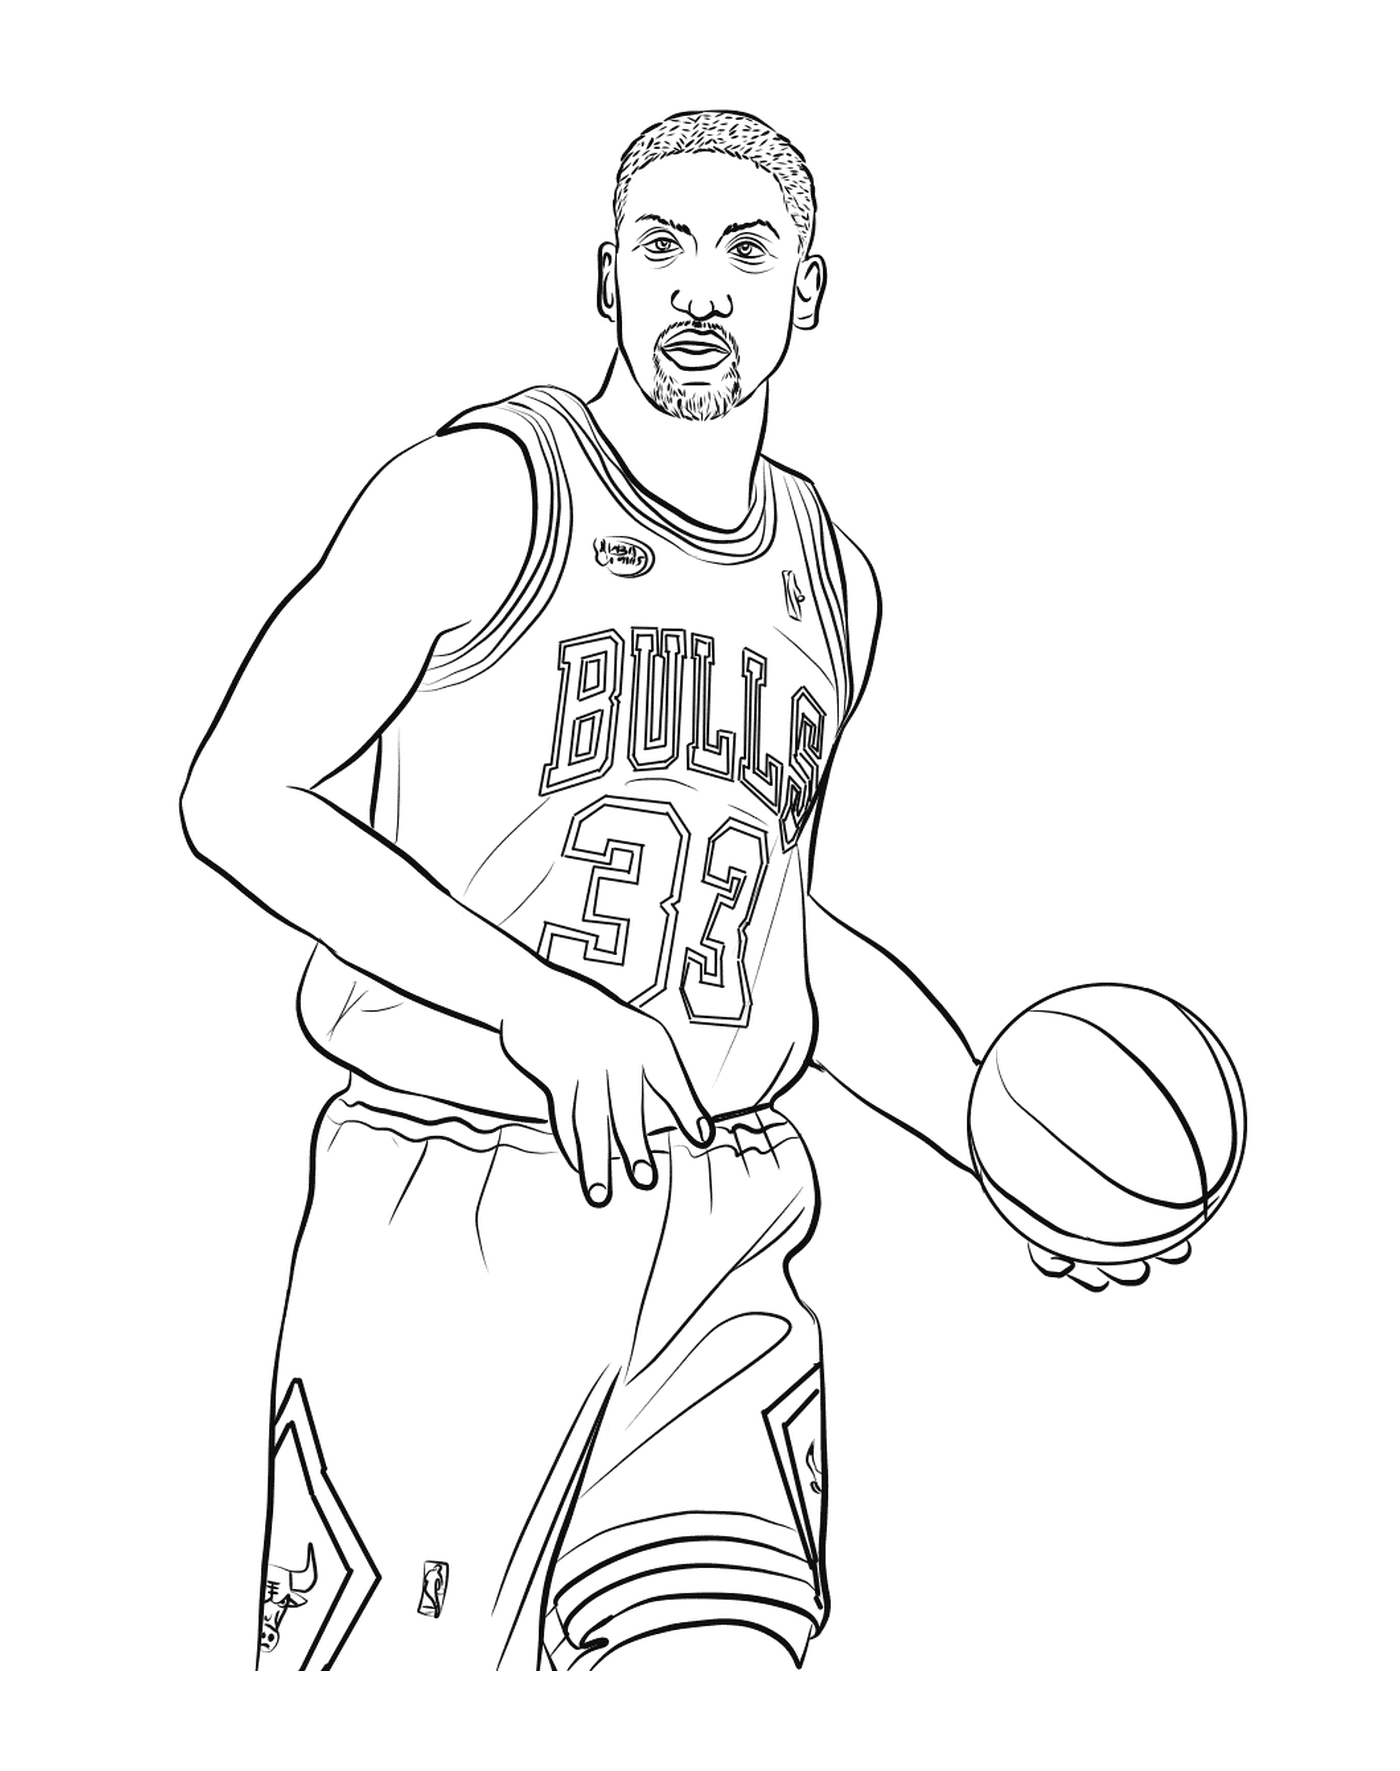  Scottie Pippen segura uma bola de basquete 